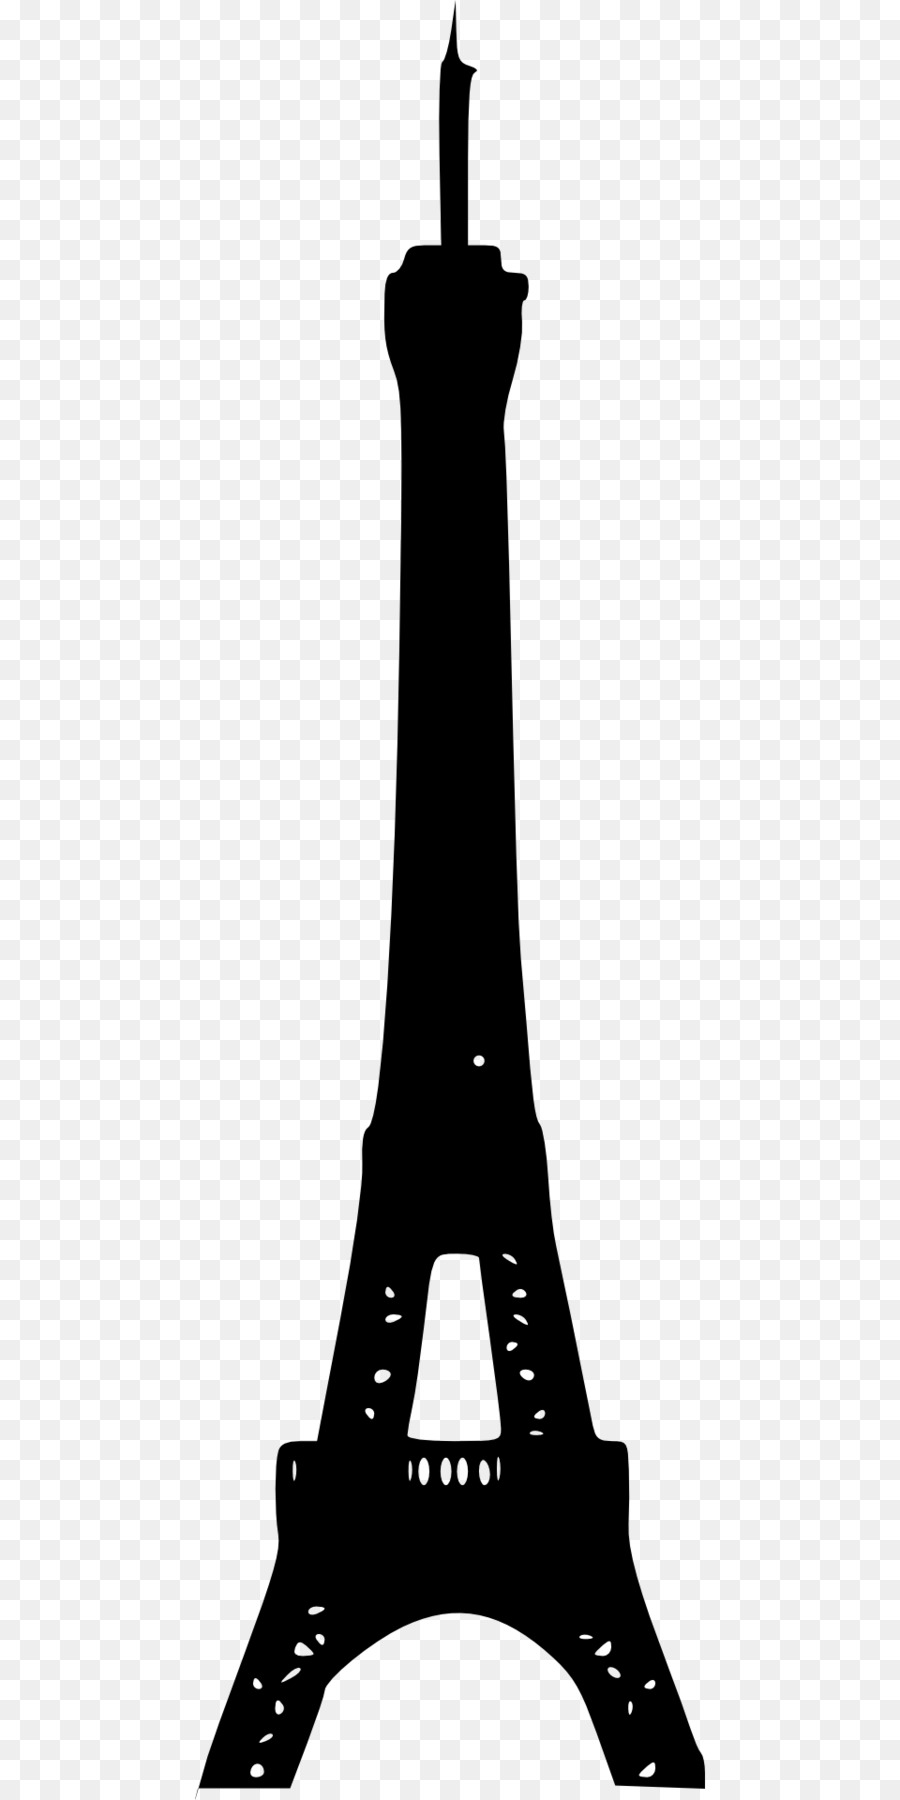 Eiffel Tower Drawing Clip art - eiffel png download - 960*1920 - Free Transparent Eiffel Tower png Download.